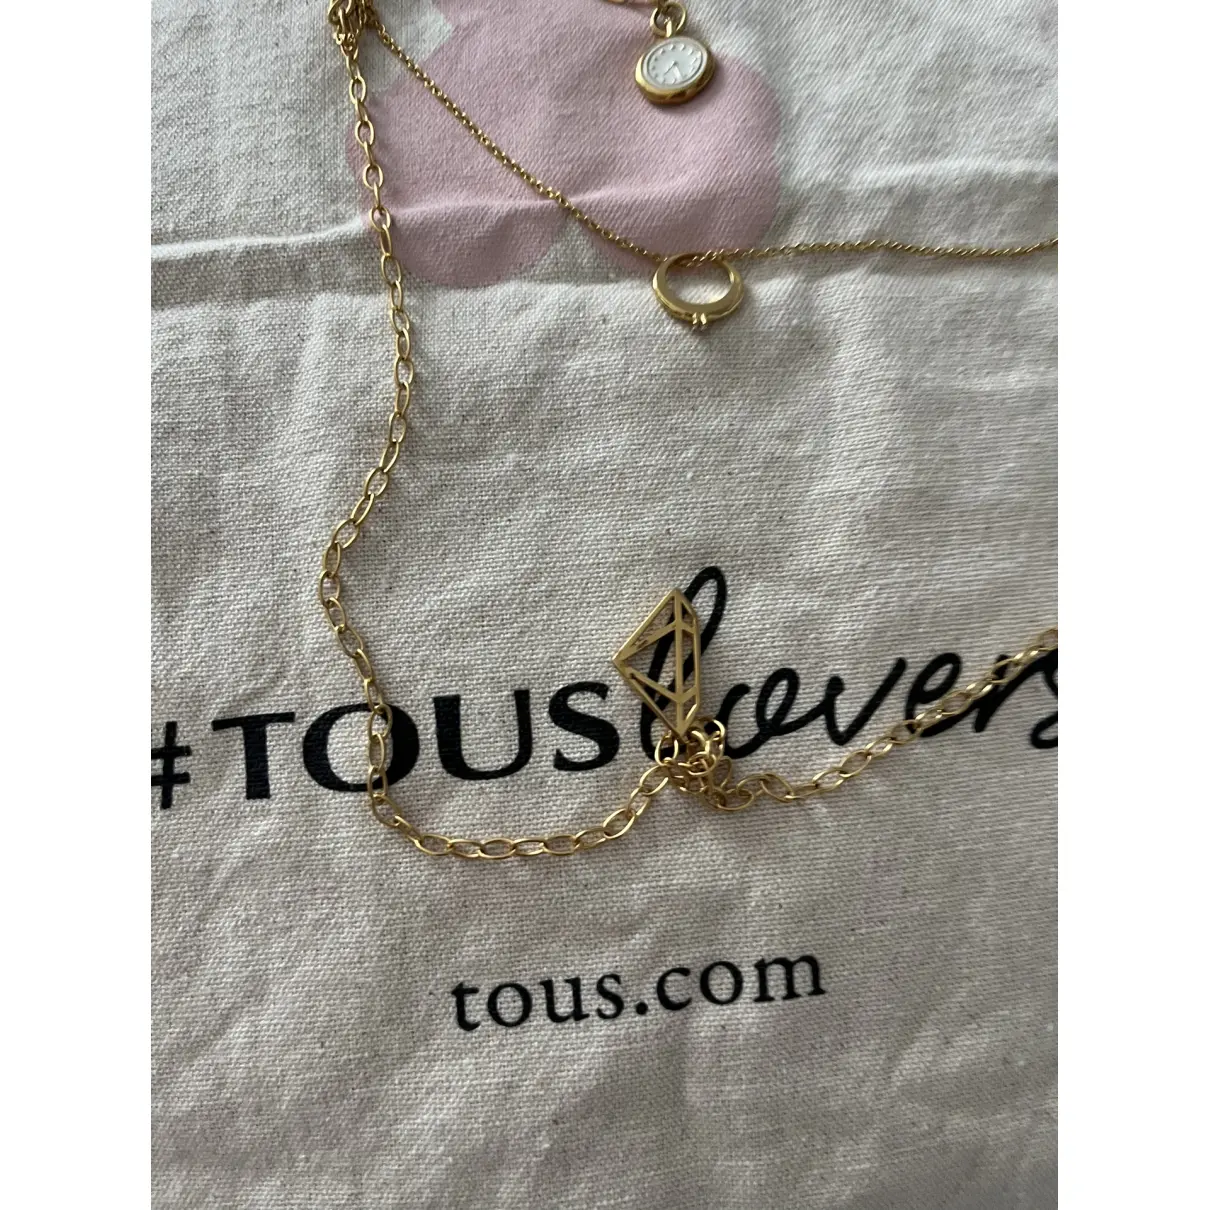 Buy TOUS Necklace online